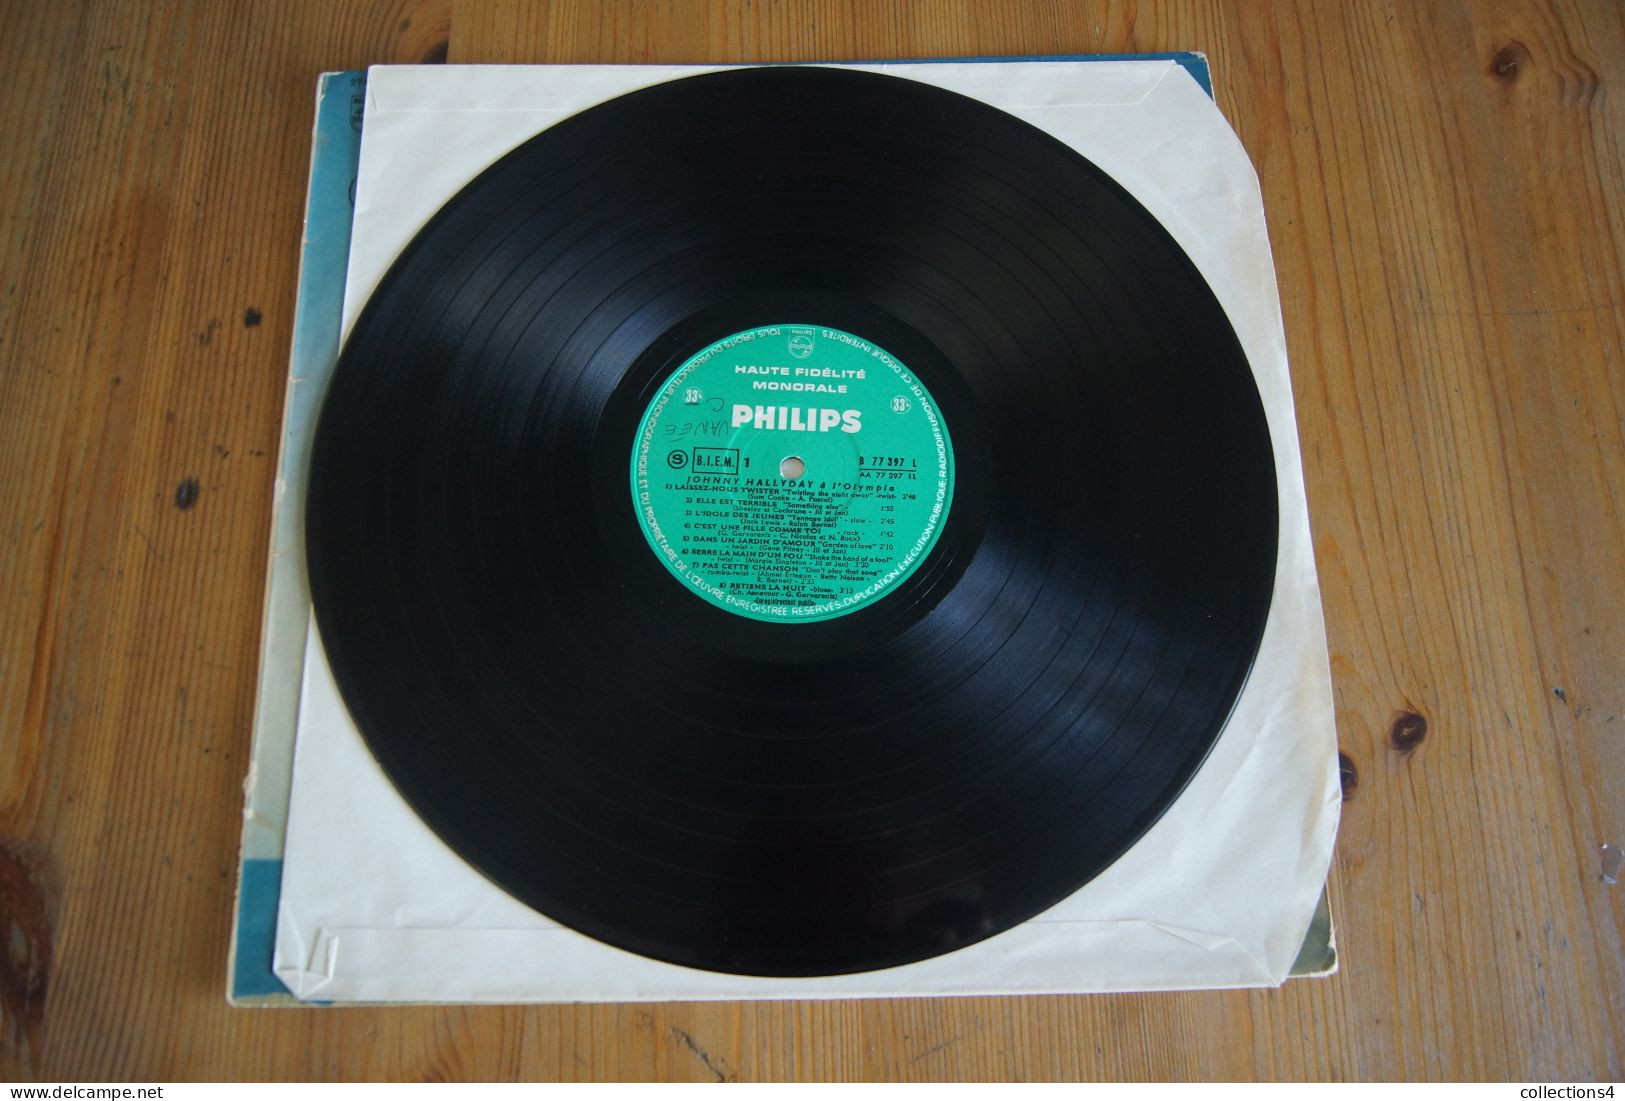 JOHNNY HALLYDAY A L OLYMPIA LP BIEM 1962 VALEUR+ VARIANTE - Rock